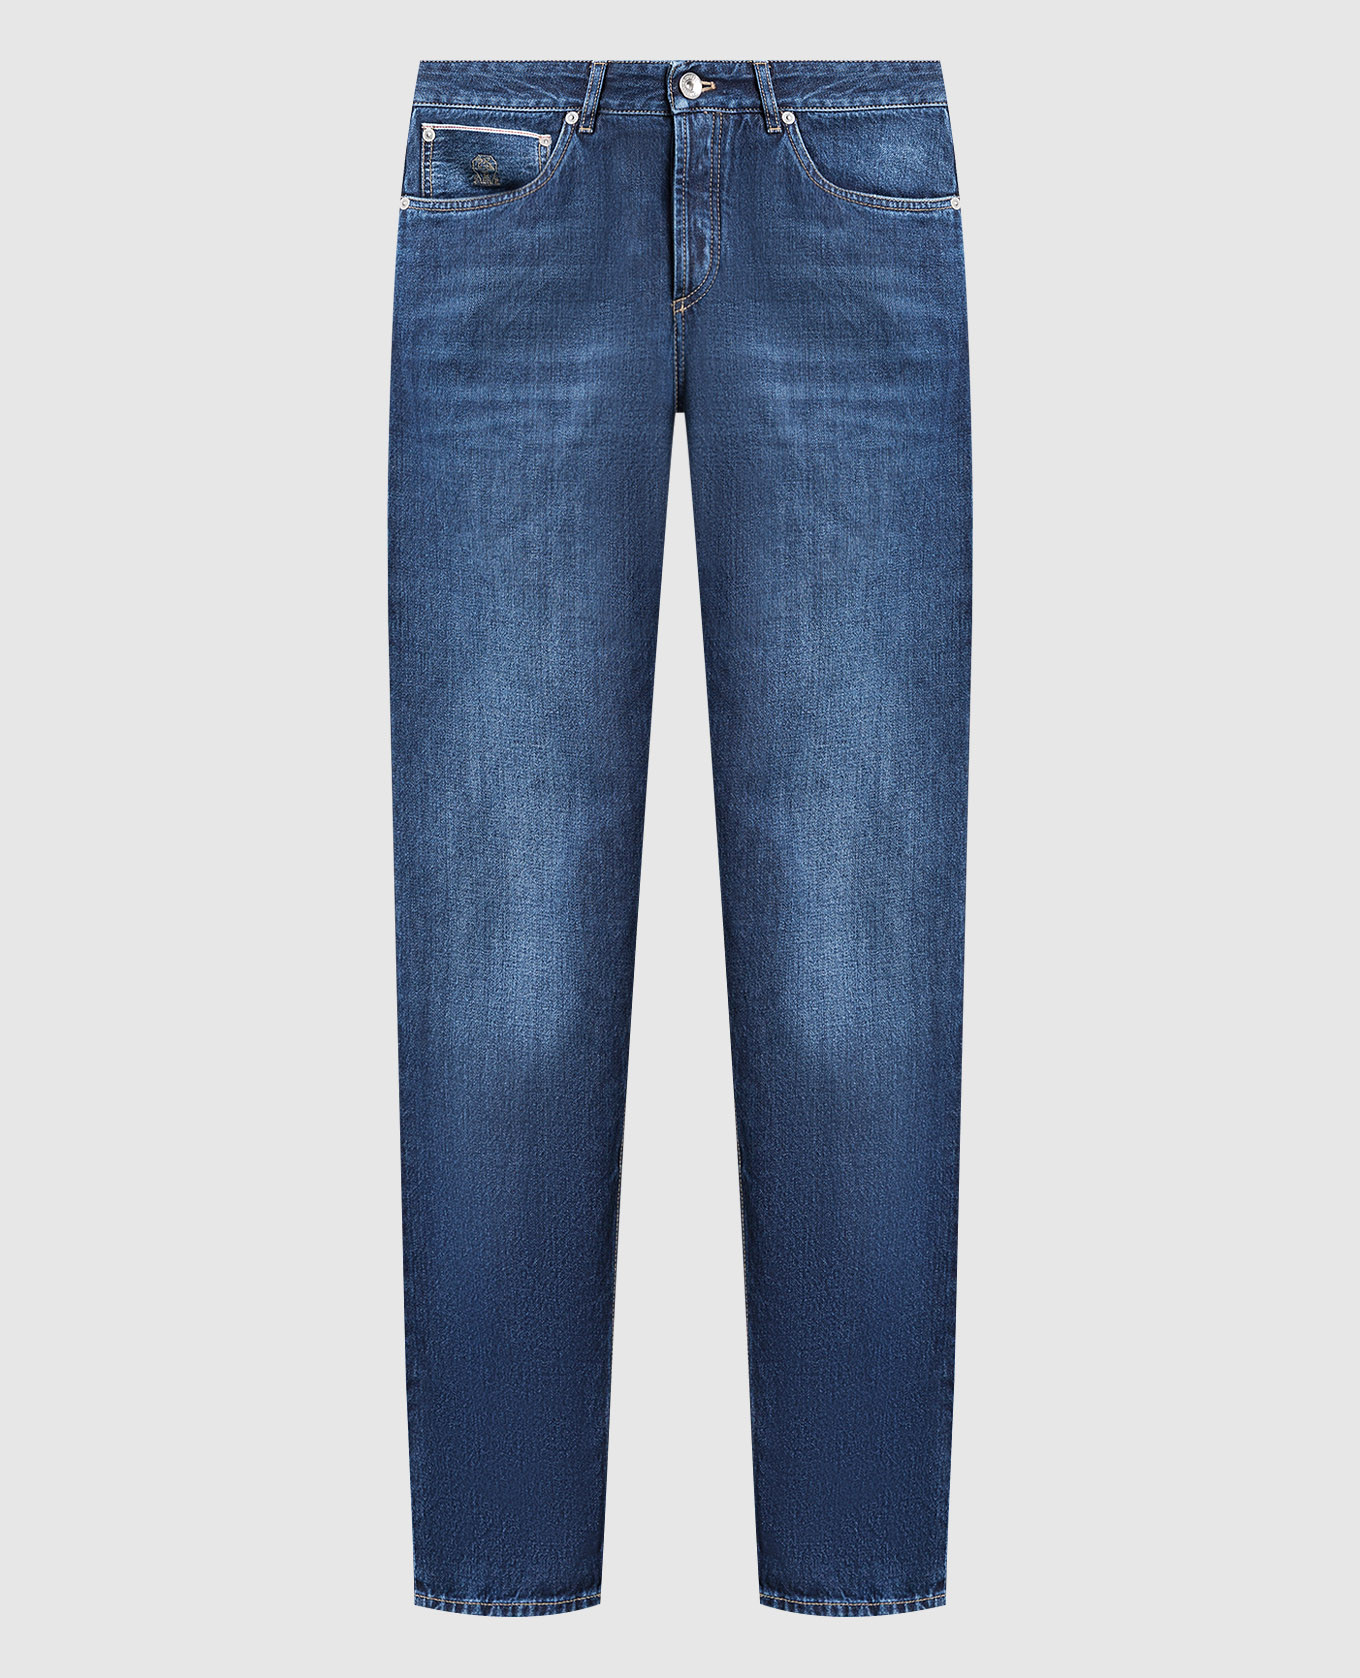 Dark blue distressed jeans